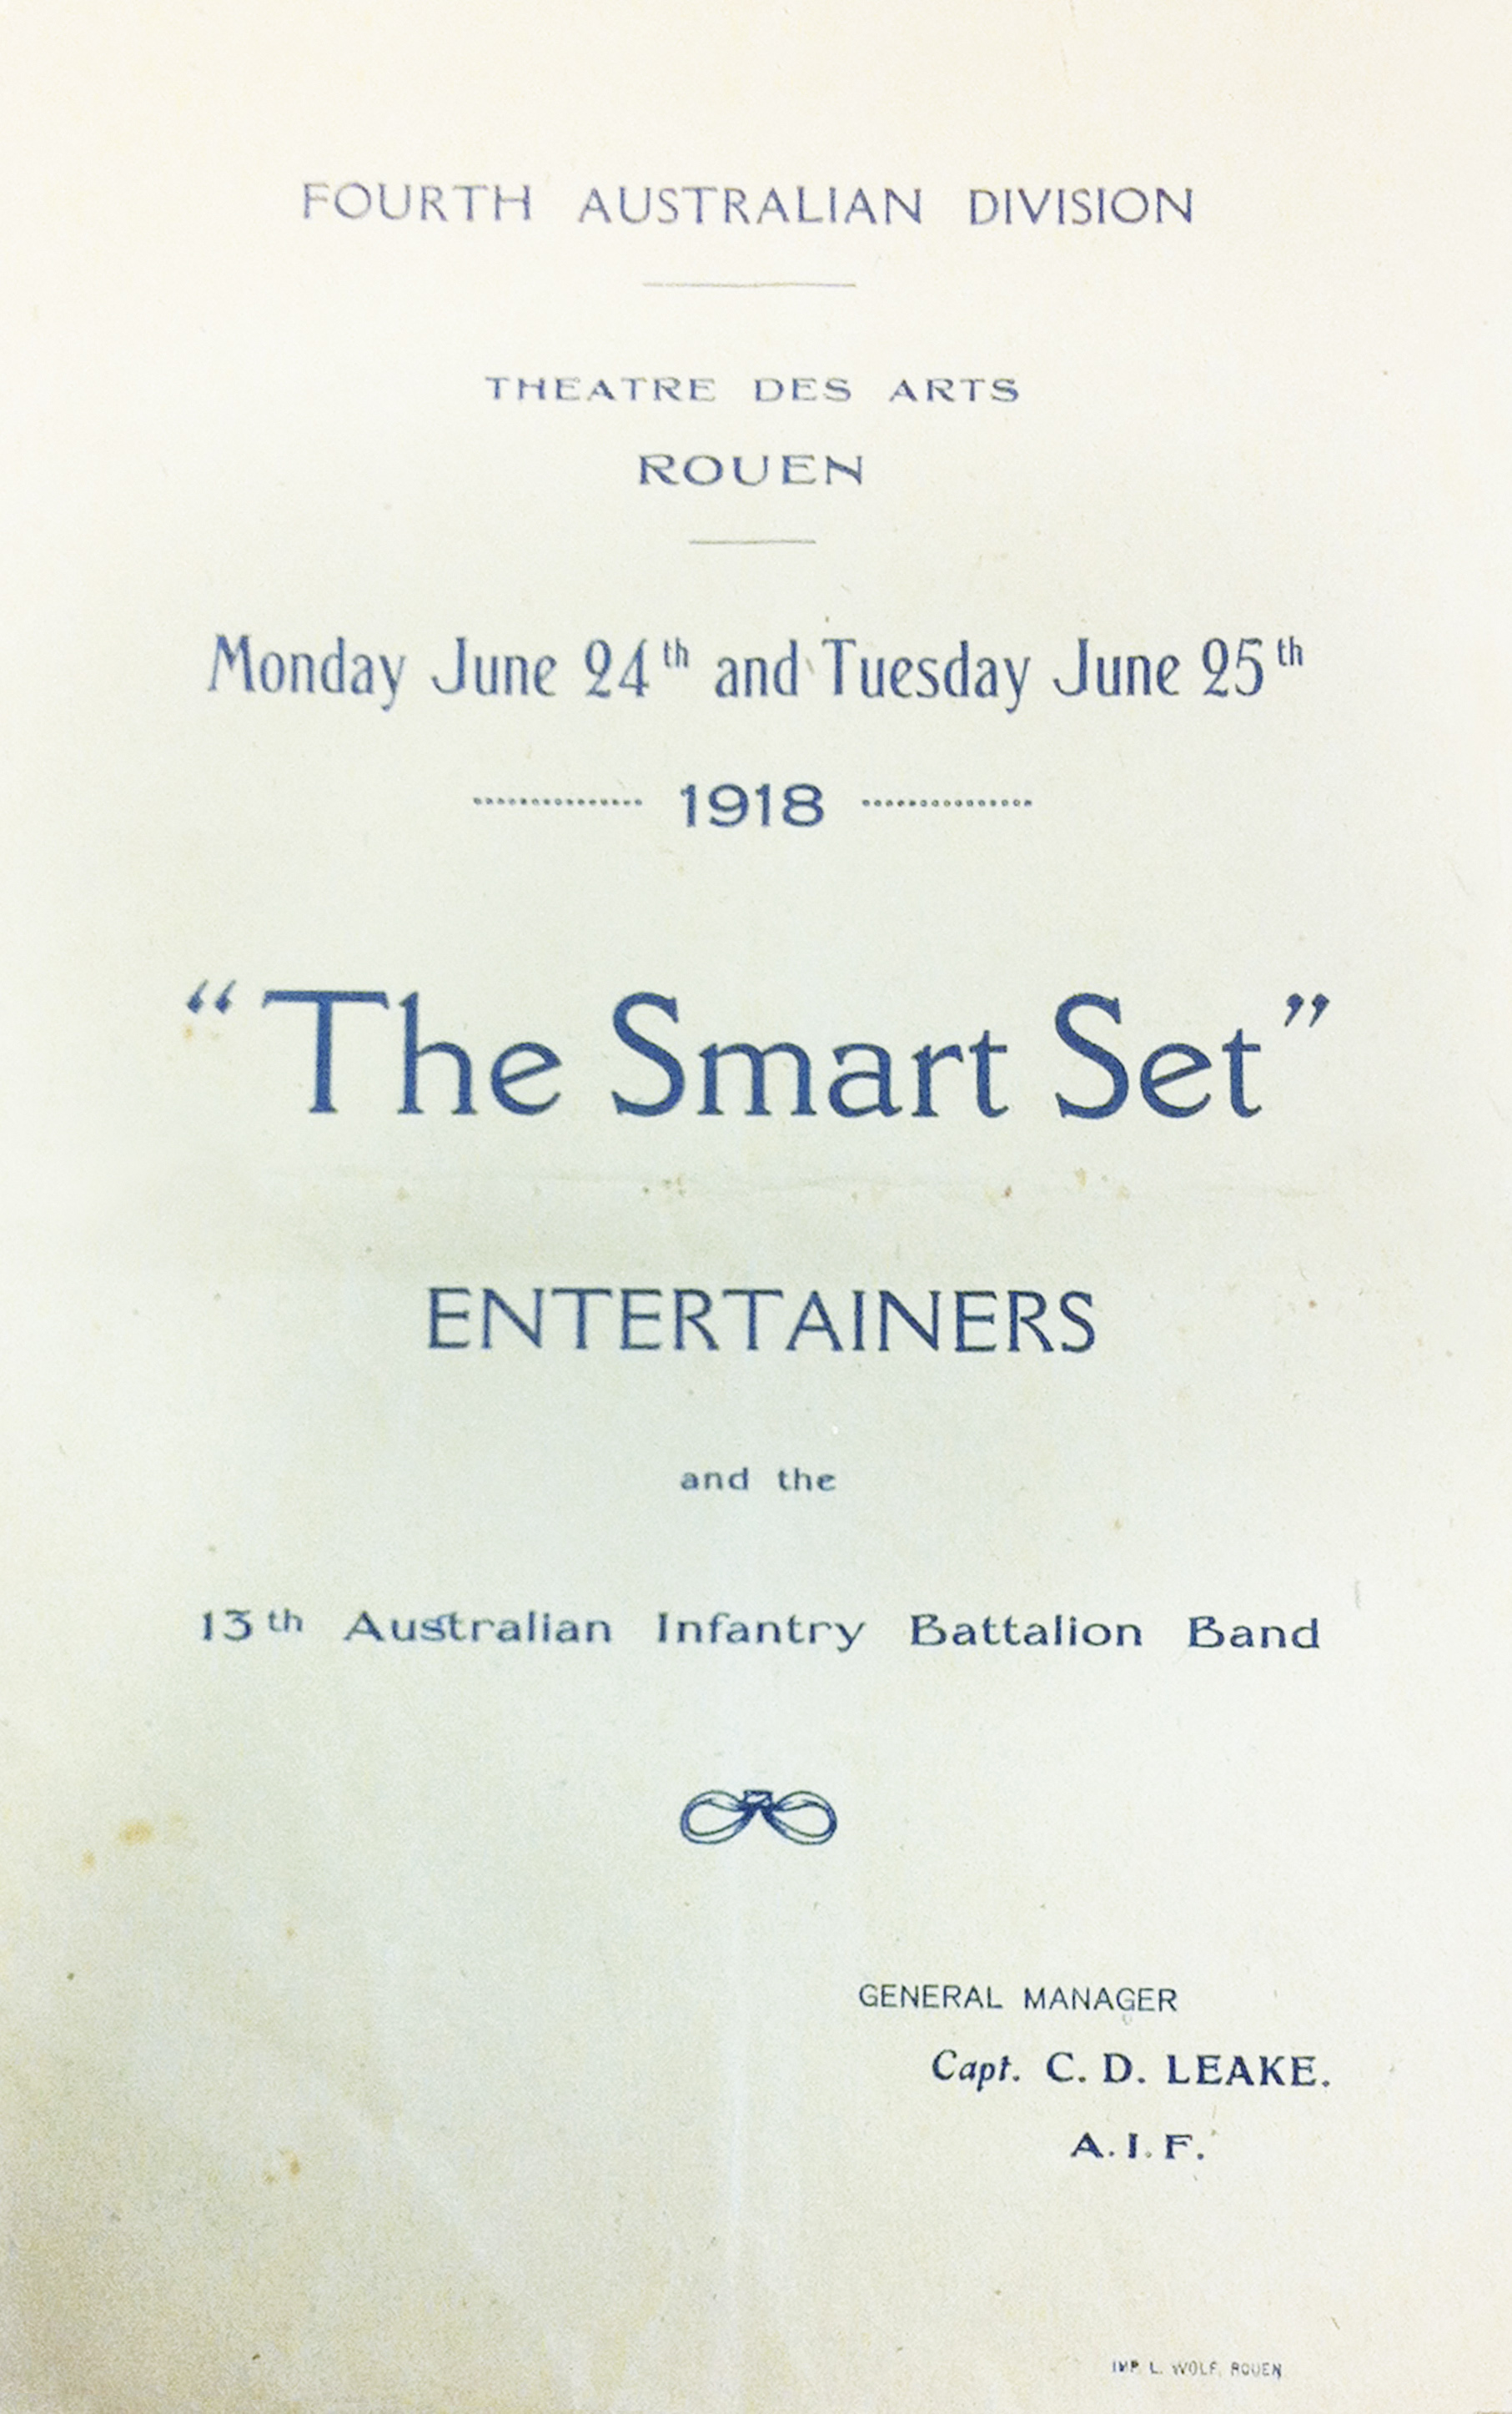 The Smart Set theatre program